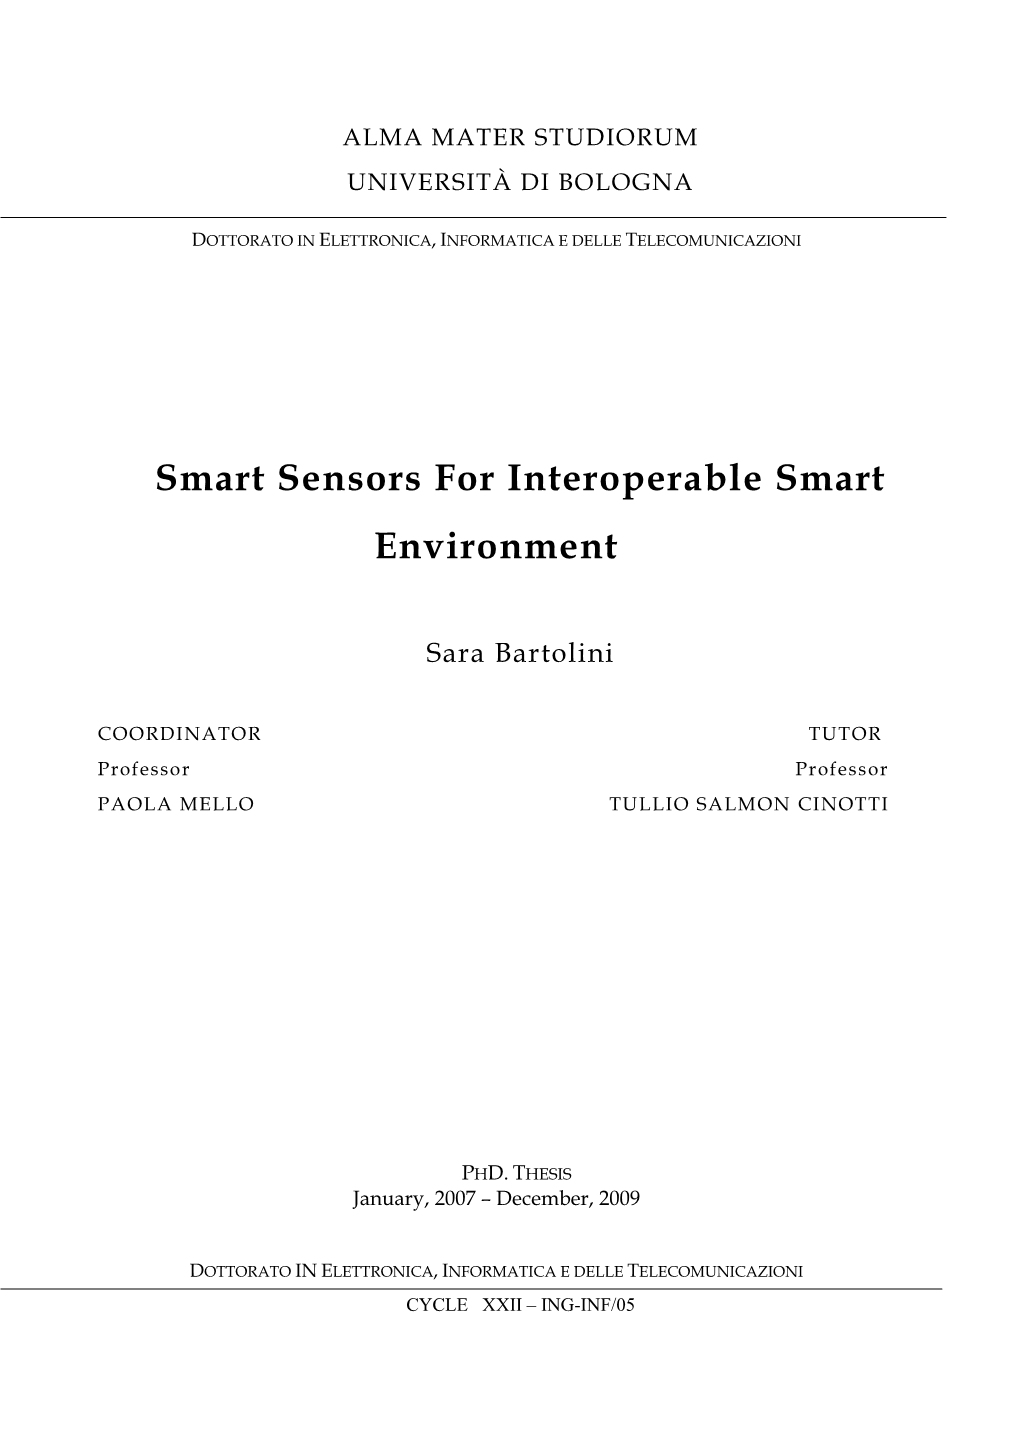 Smart Sensors for Interoperable Smart Environment